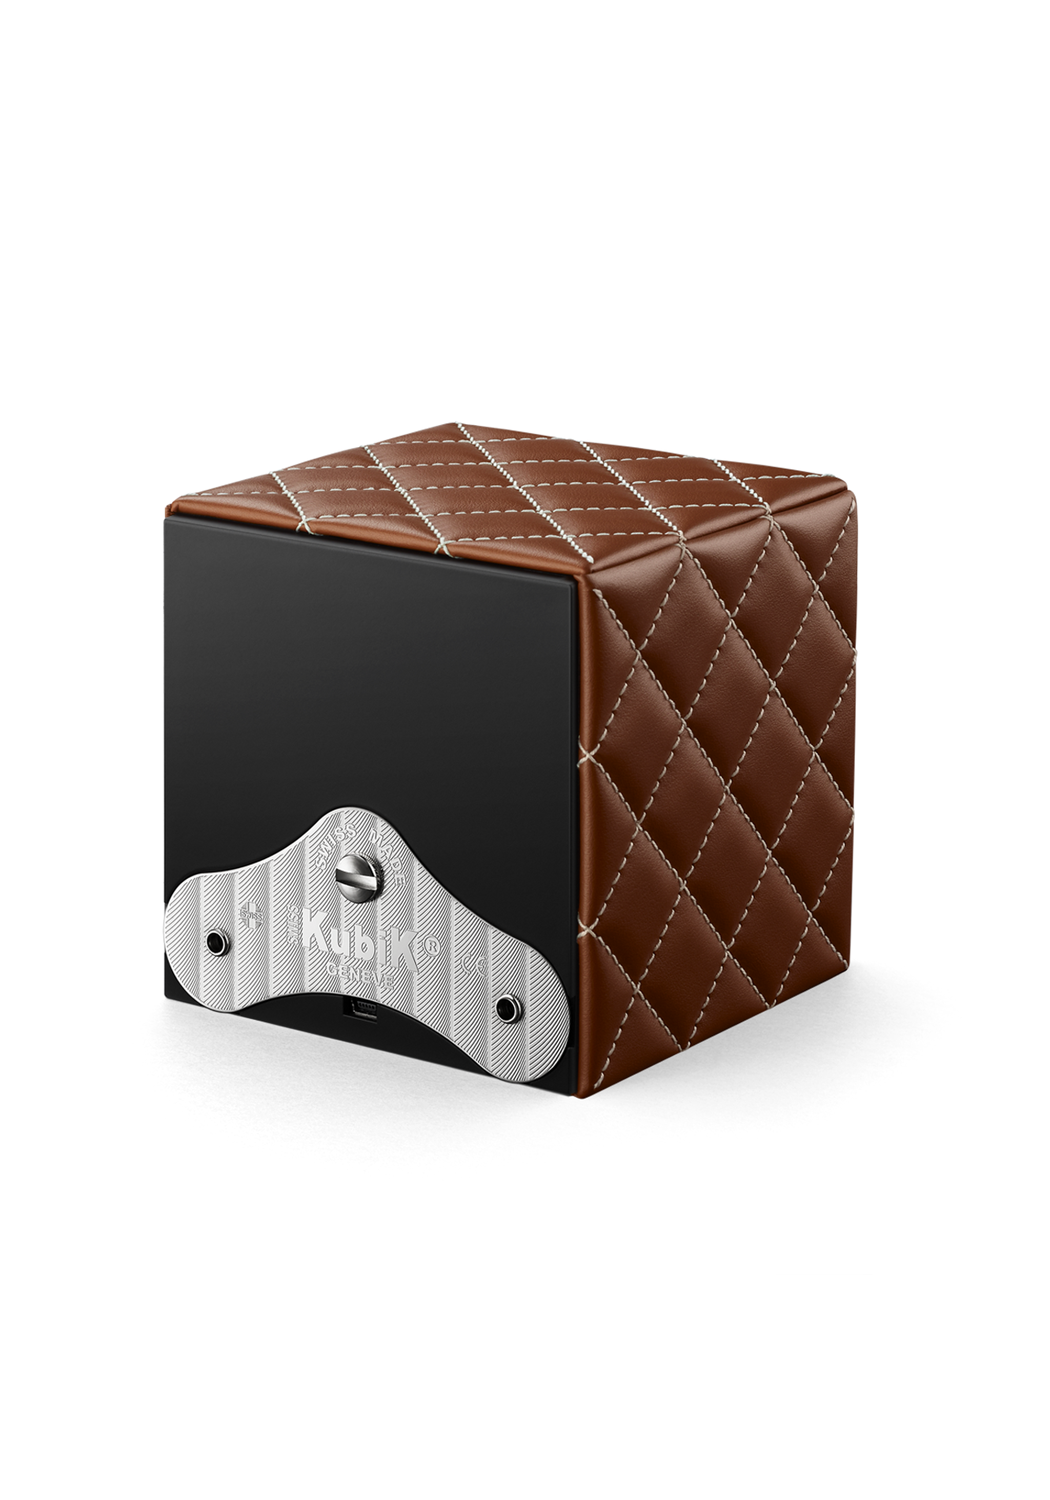 SwissKubiK Single Masterbox Cognac Leather Watch Winder | OsterJewelers.com